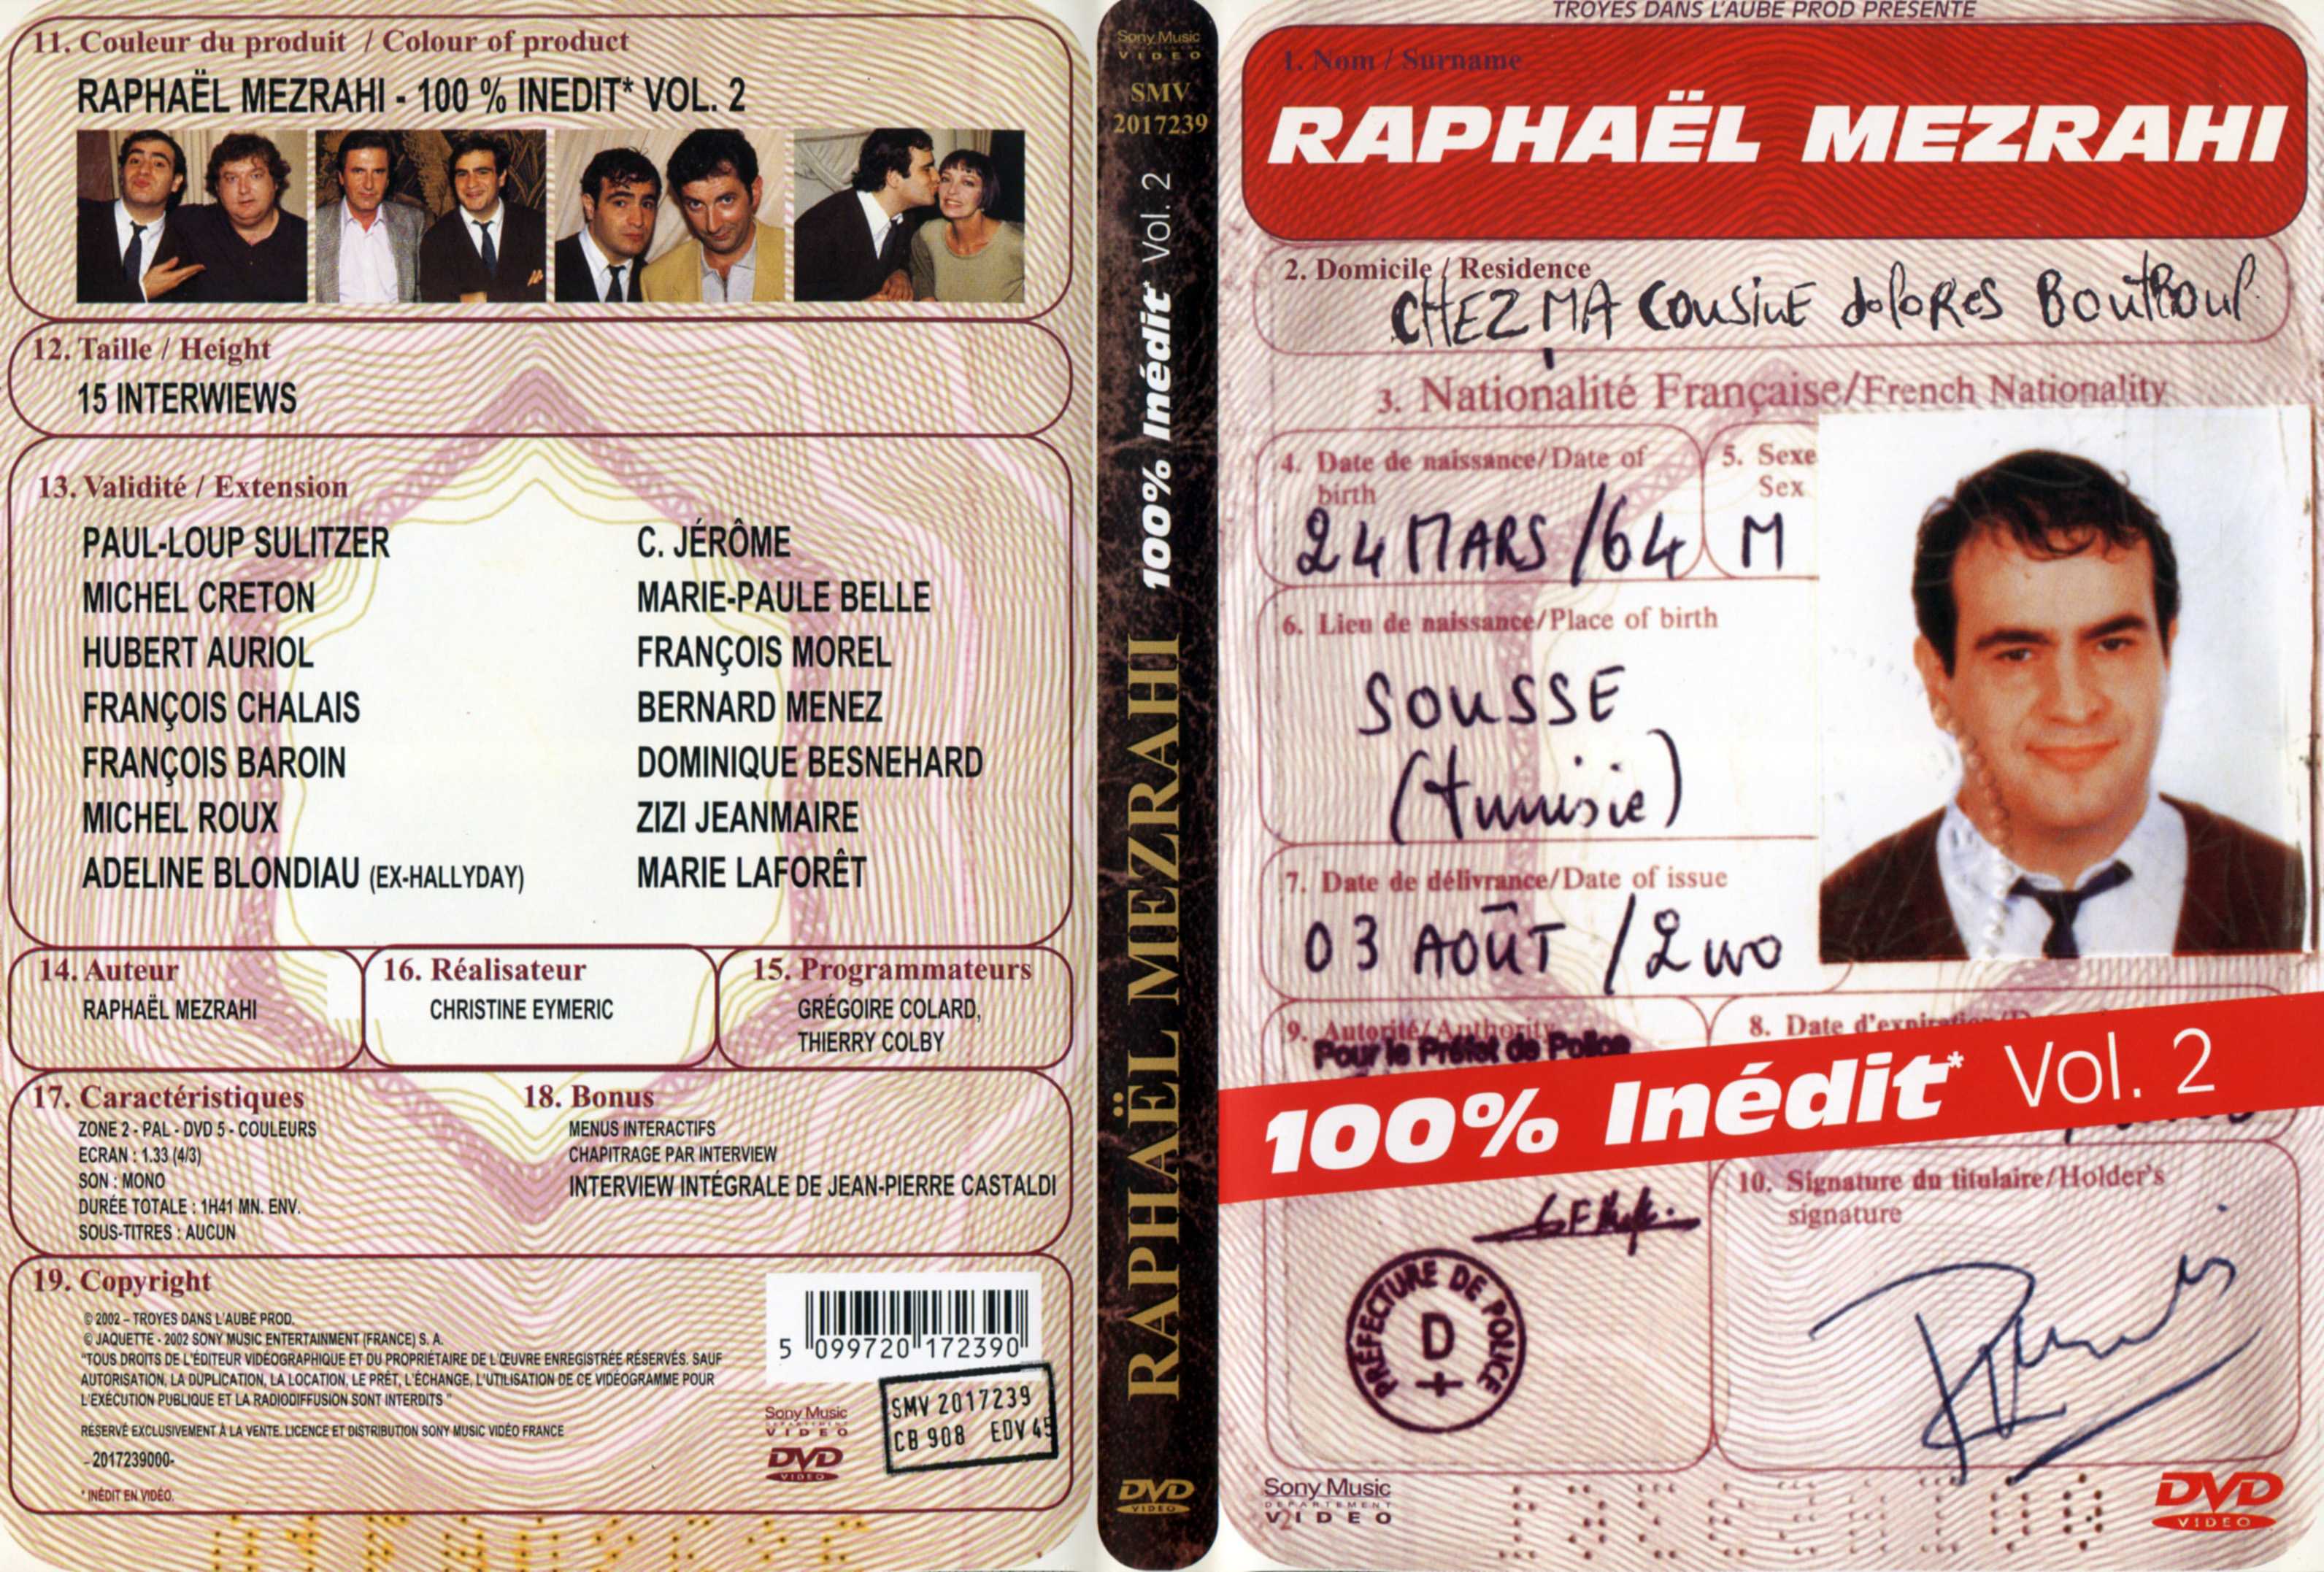 Jaquette DVD Raphael Mezrahi 100 inedit vol 2